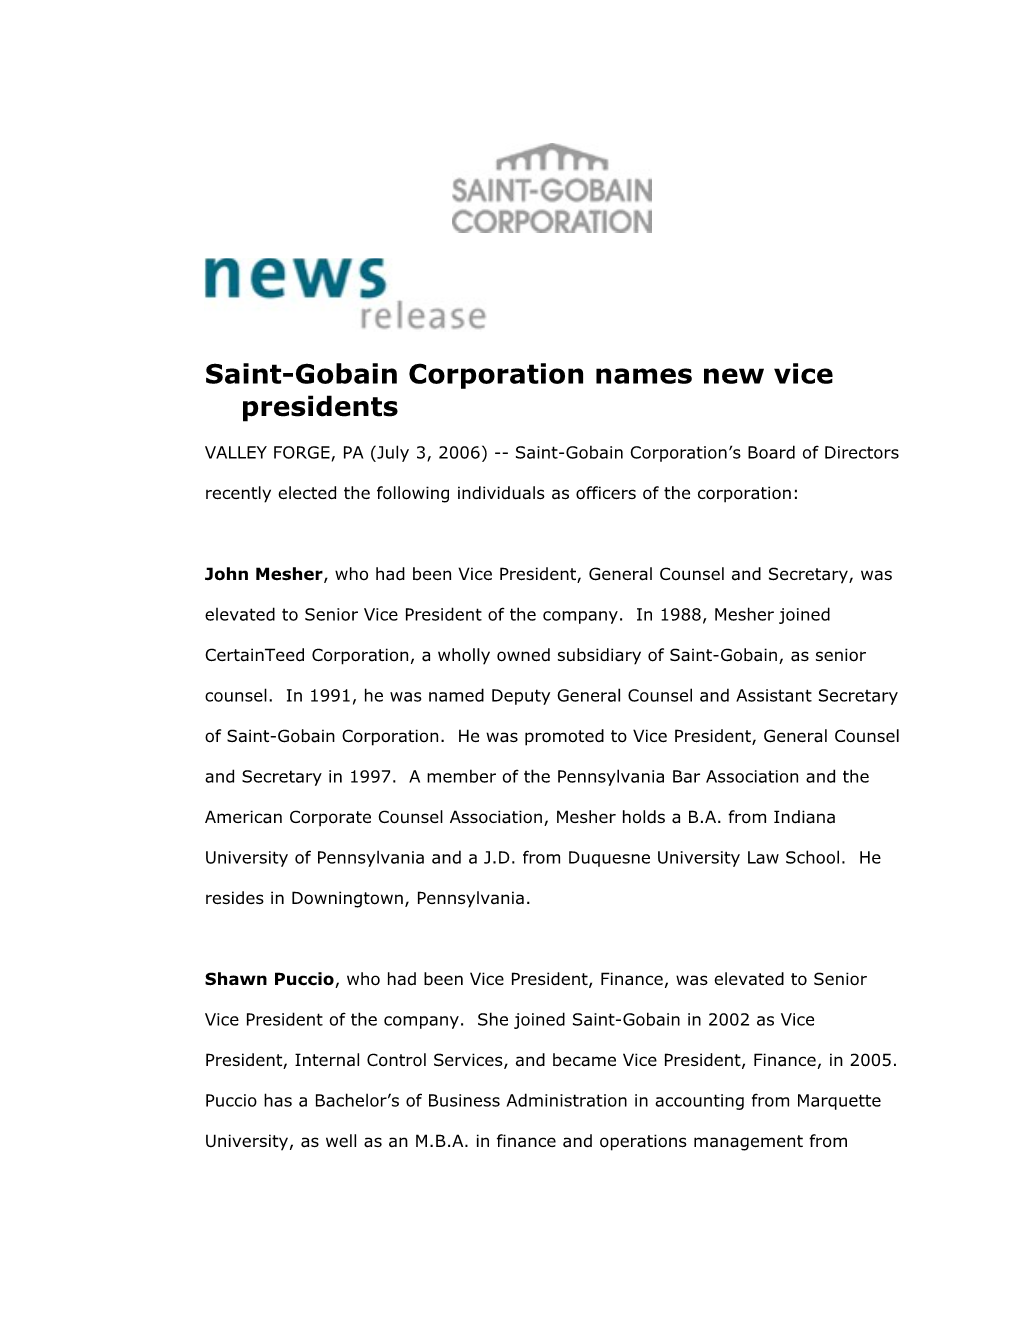 Saint-Gobain Corporation Names New Vice Presidents